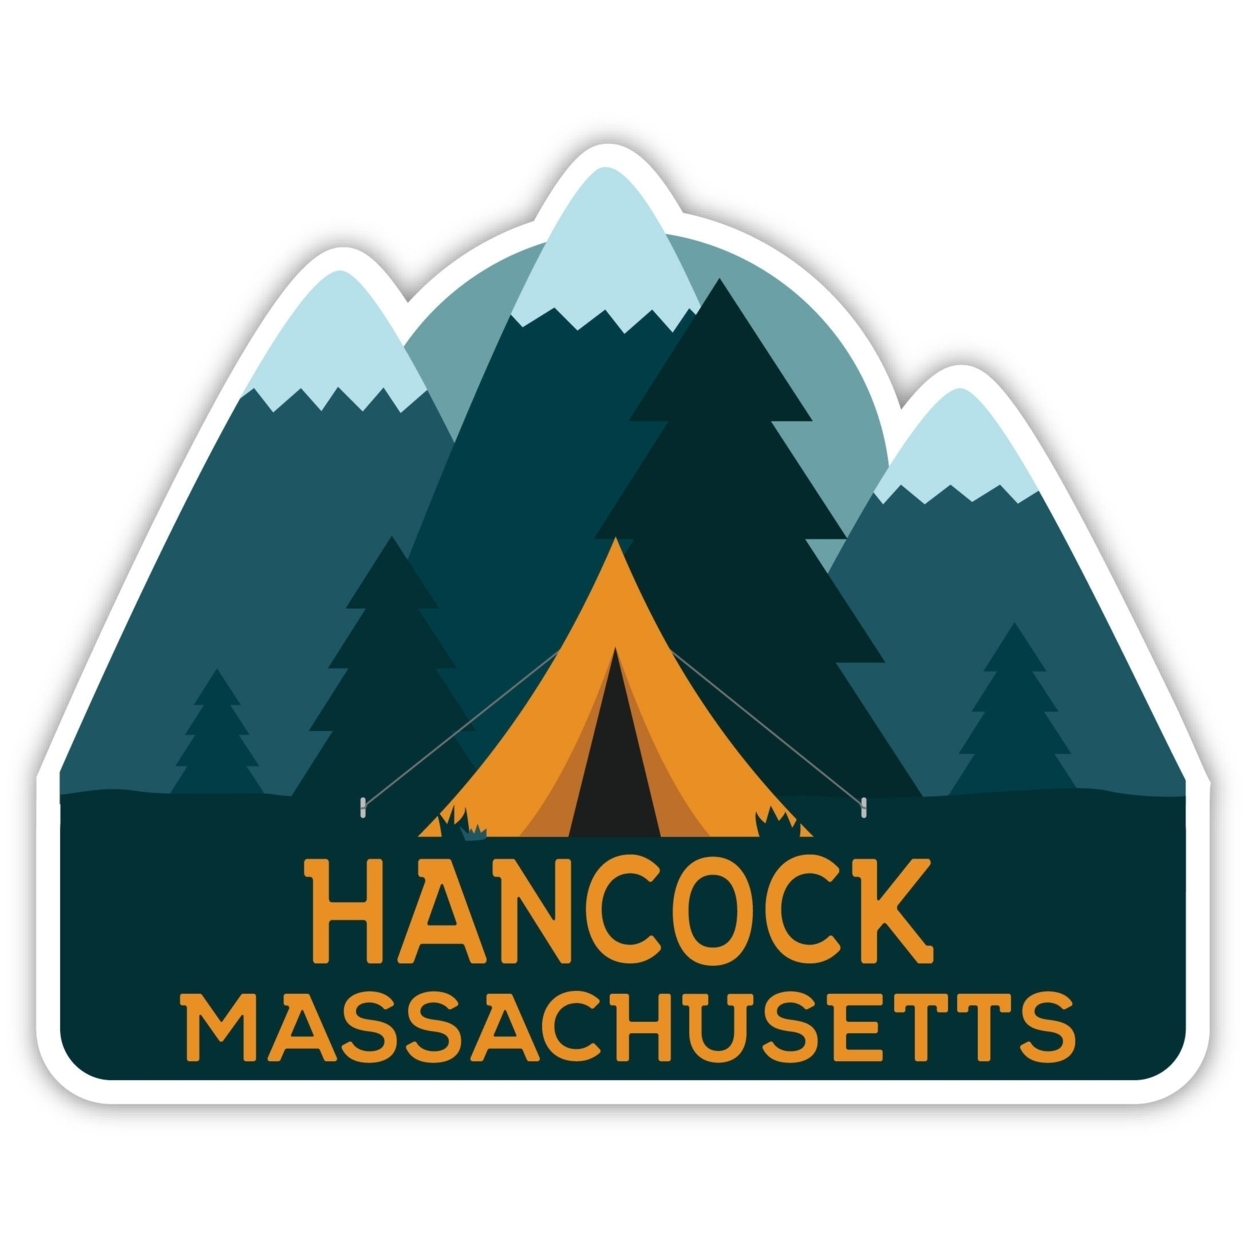 Hancock Massachusetts Souvenir Decorative Stickers (Choose Theme And Size) - 4-Pack, 4-Inch, Tent